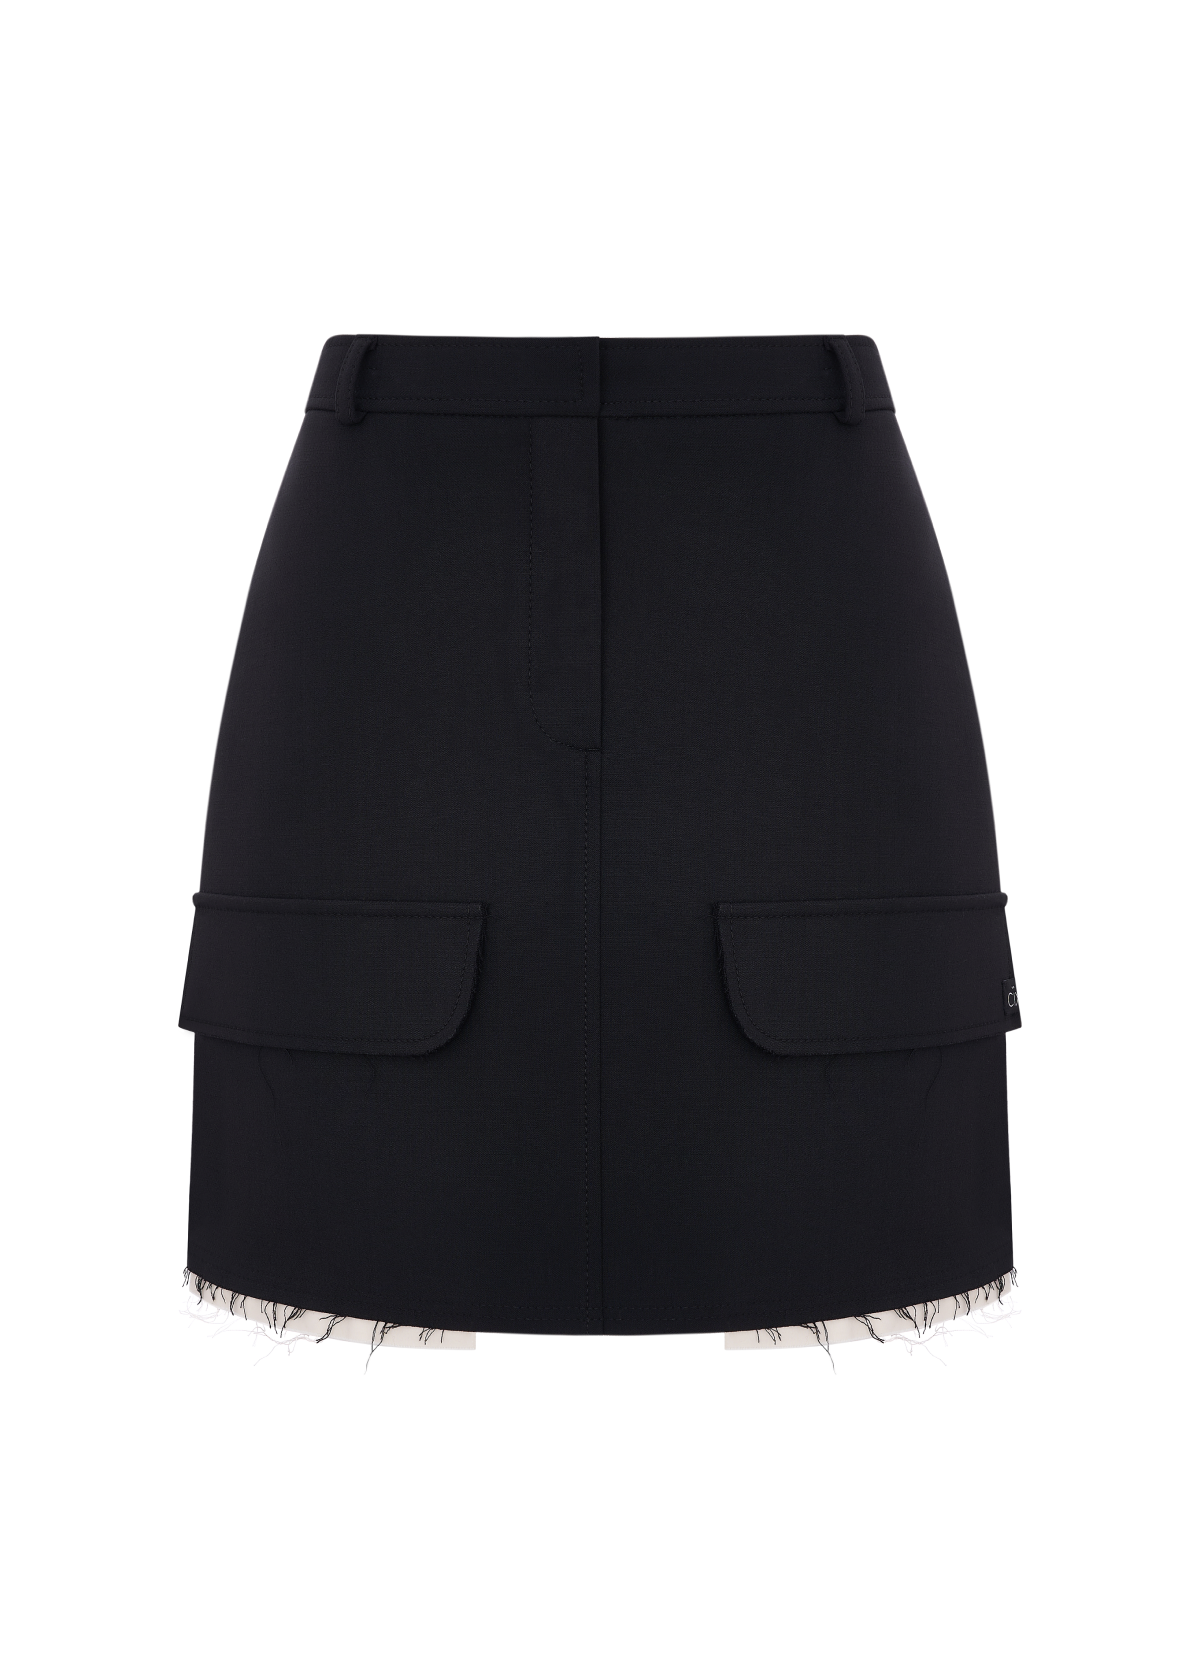 Mini skirt in black